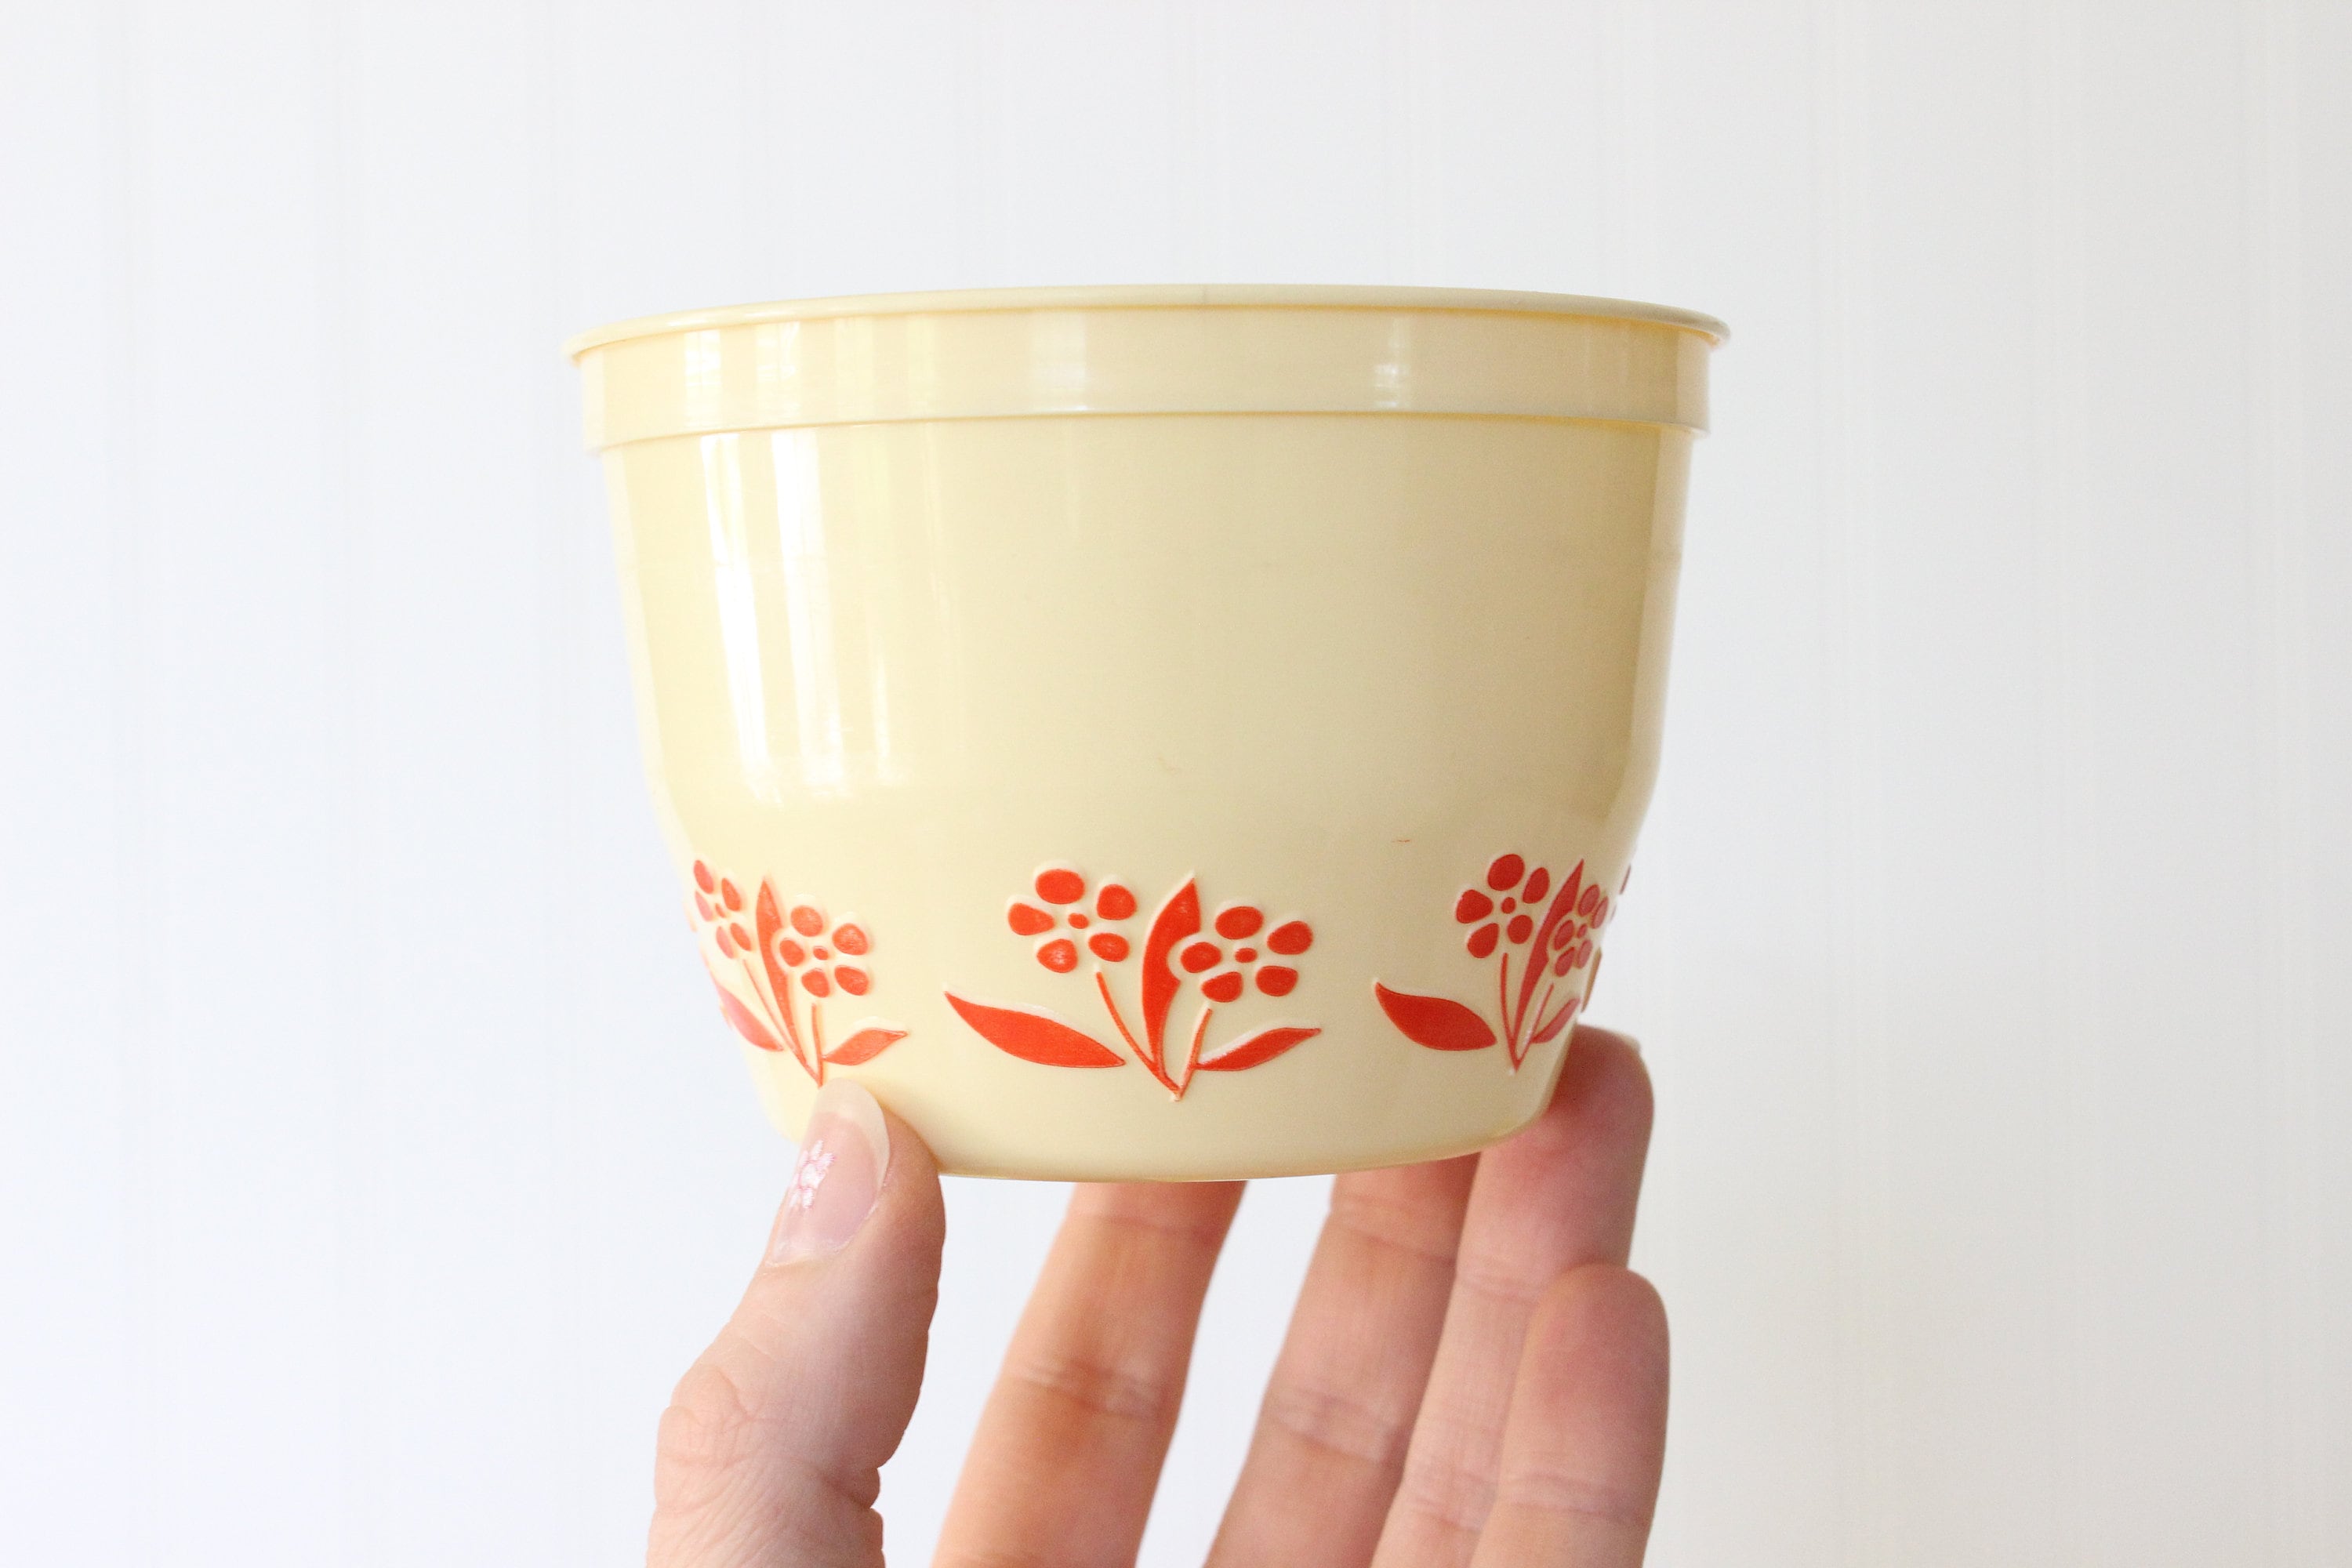 Vintage Margarine Bowls, Set of Plastic Margarine Tubs, Red Flower Bowl Set,  Mid Century Kitchen 